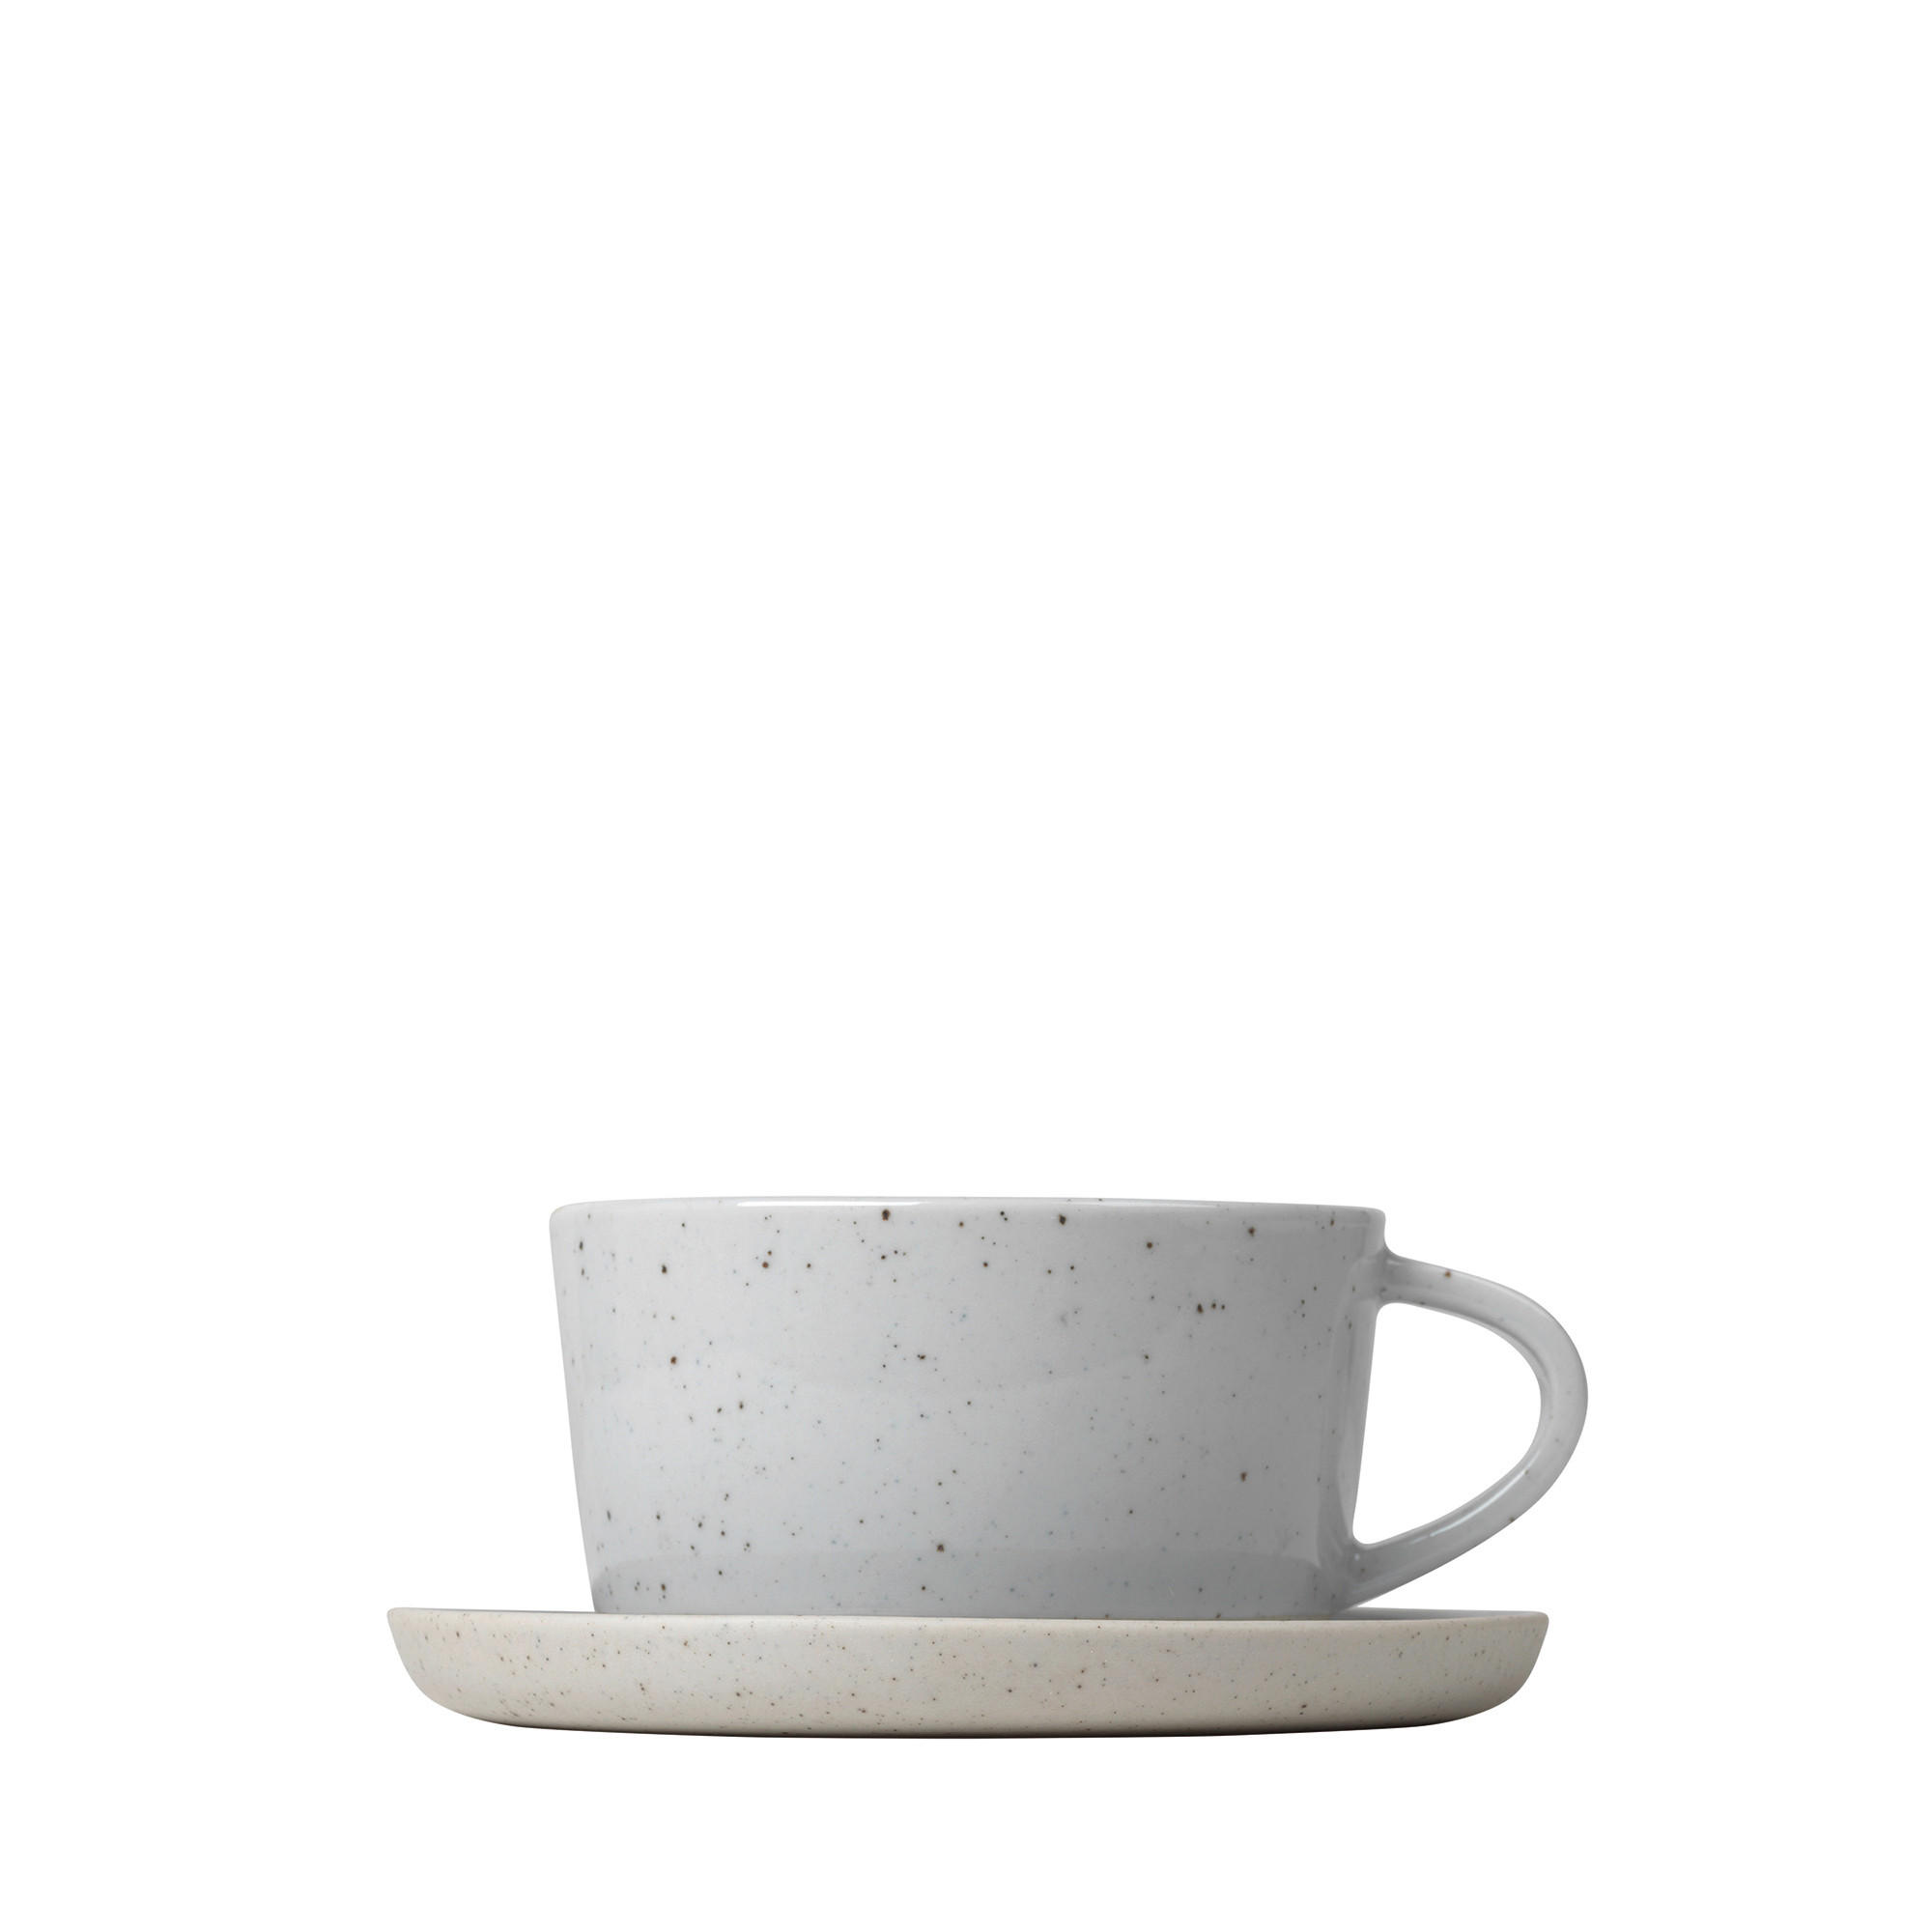 TASSENSET 4-teilig Keramik Grau, Beige  - Beige/Grau, Design, Keramik (8,5/5,5cm) - Blomus